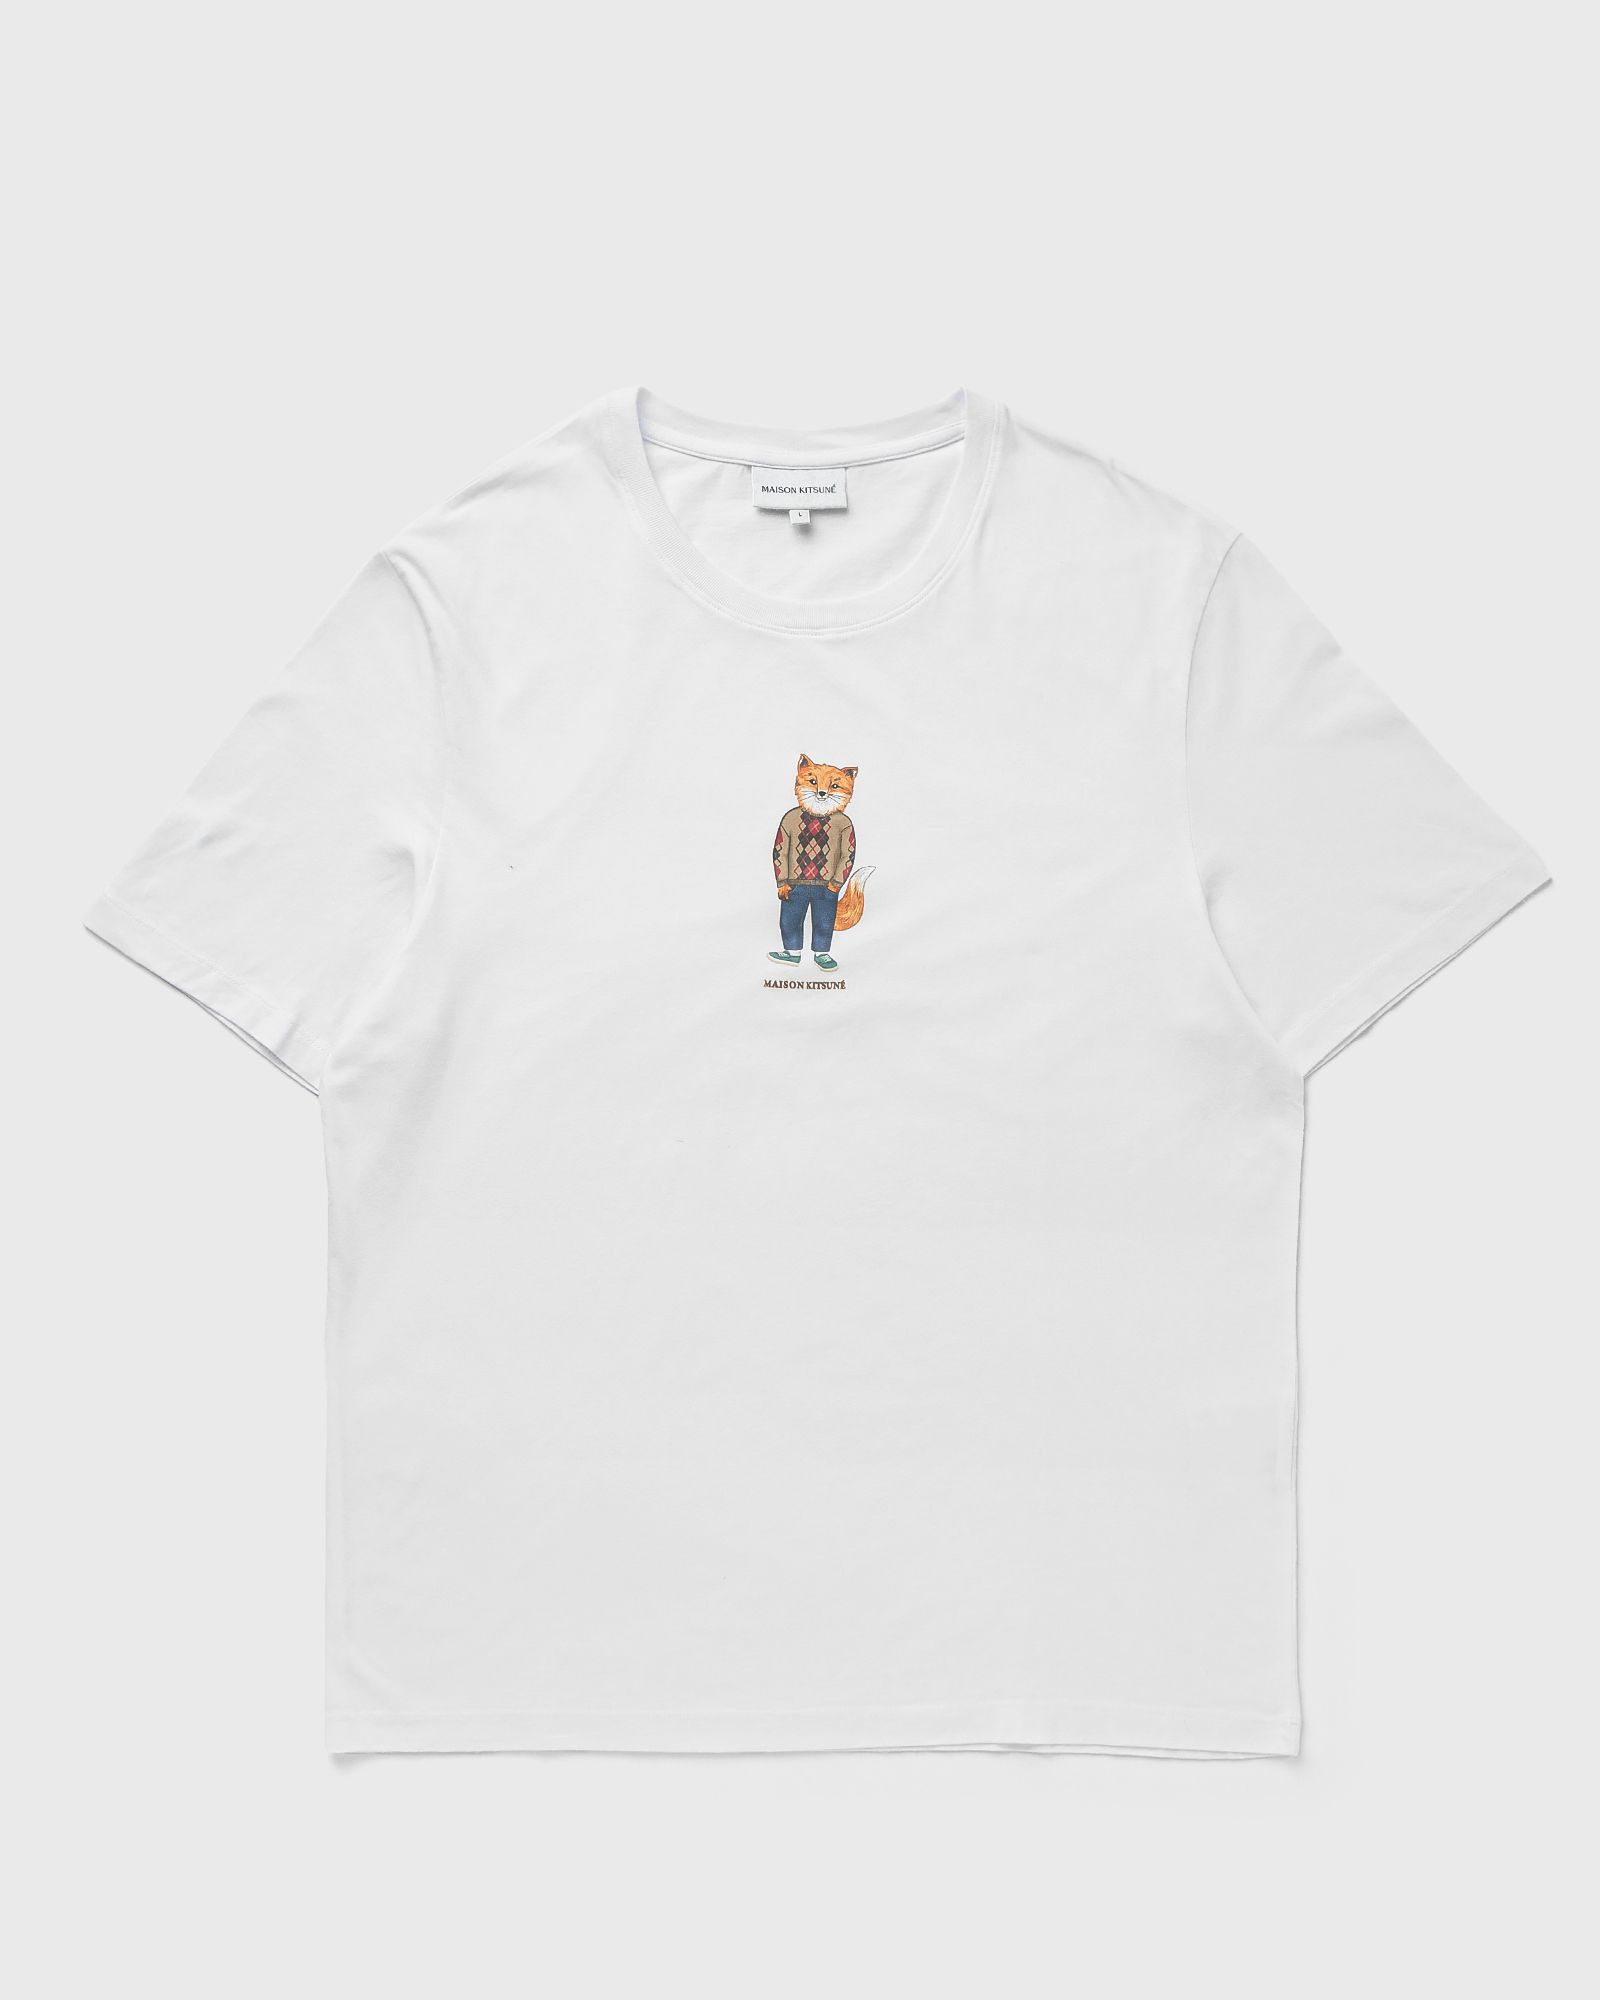 Maison Kitsune - dressed fox regular tee shirt men shortsleeves white in größe:xl